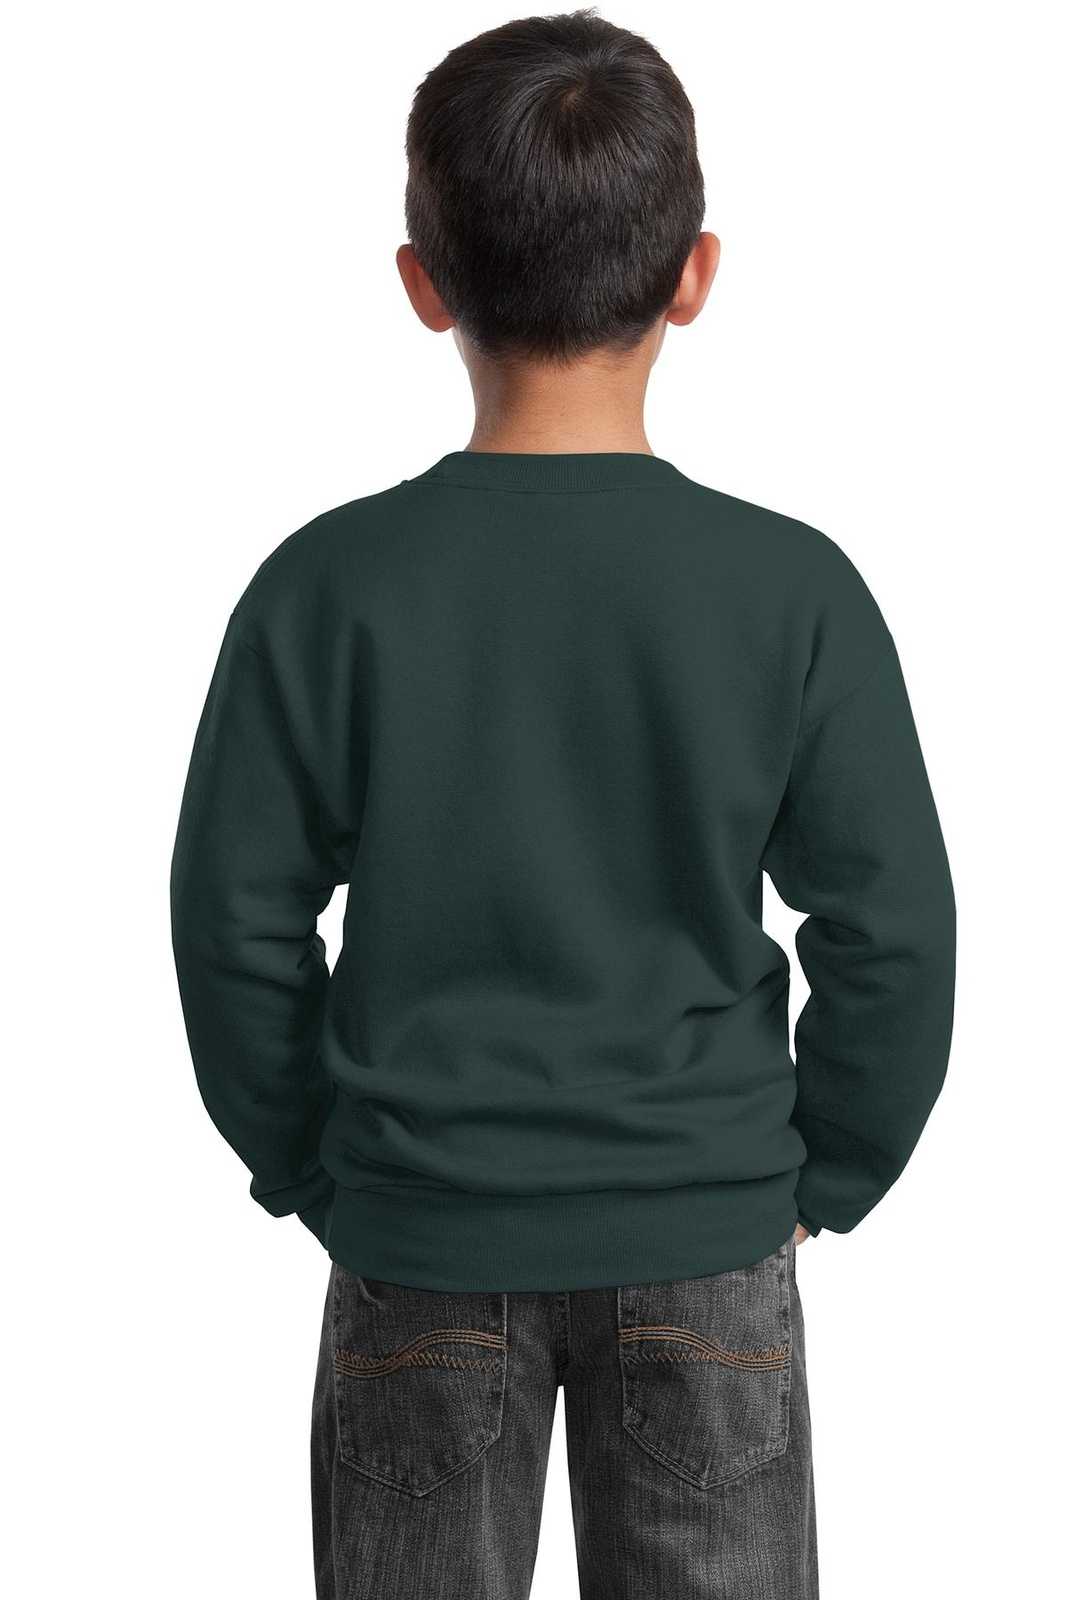 Port & Company PC90Y Youth Core Fleece Crewneck Sweatshirt - Dark Green - HIT a Double - 1